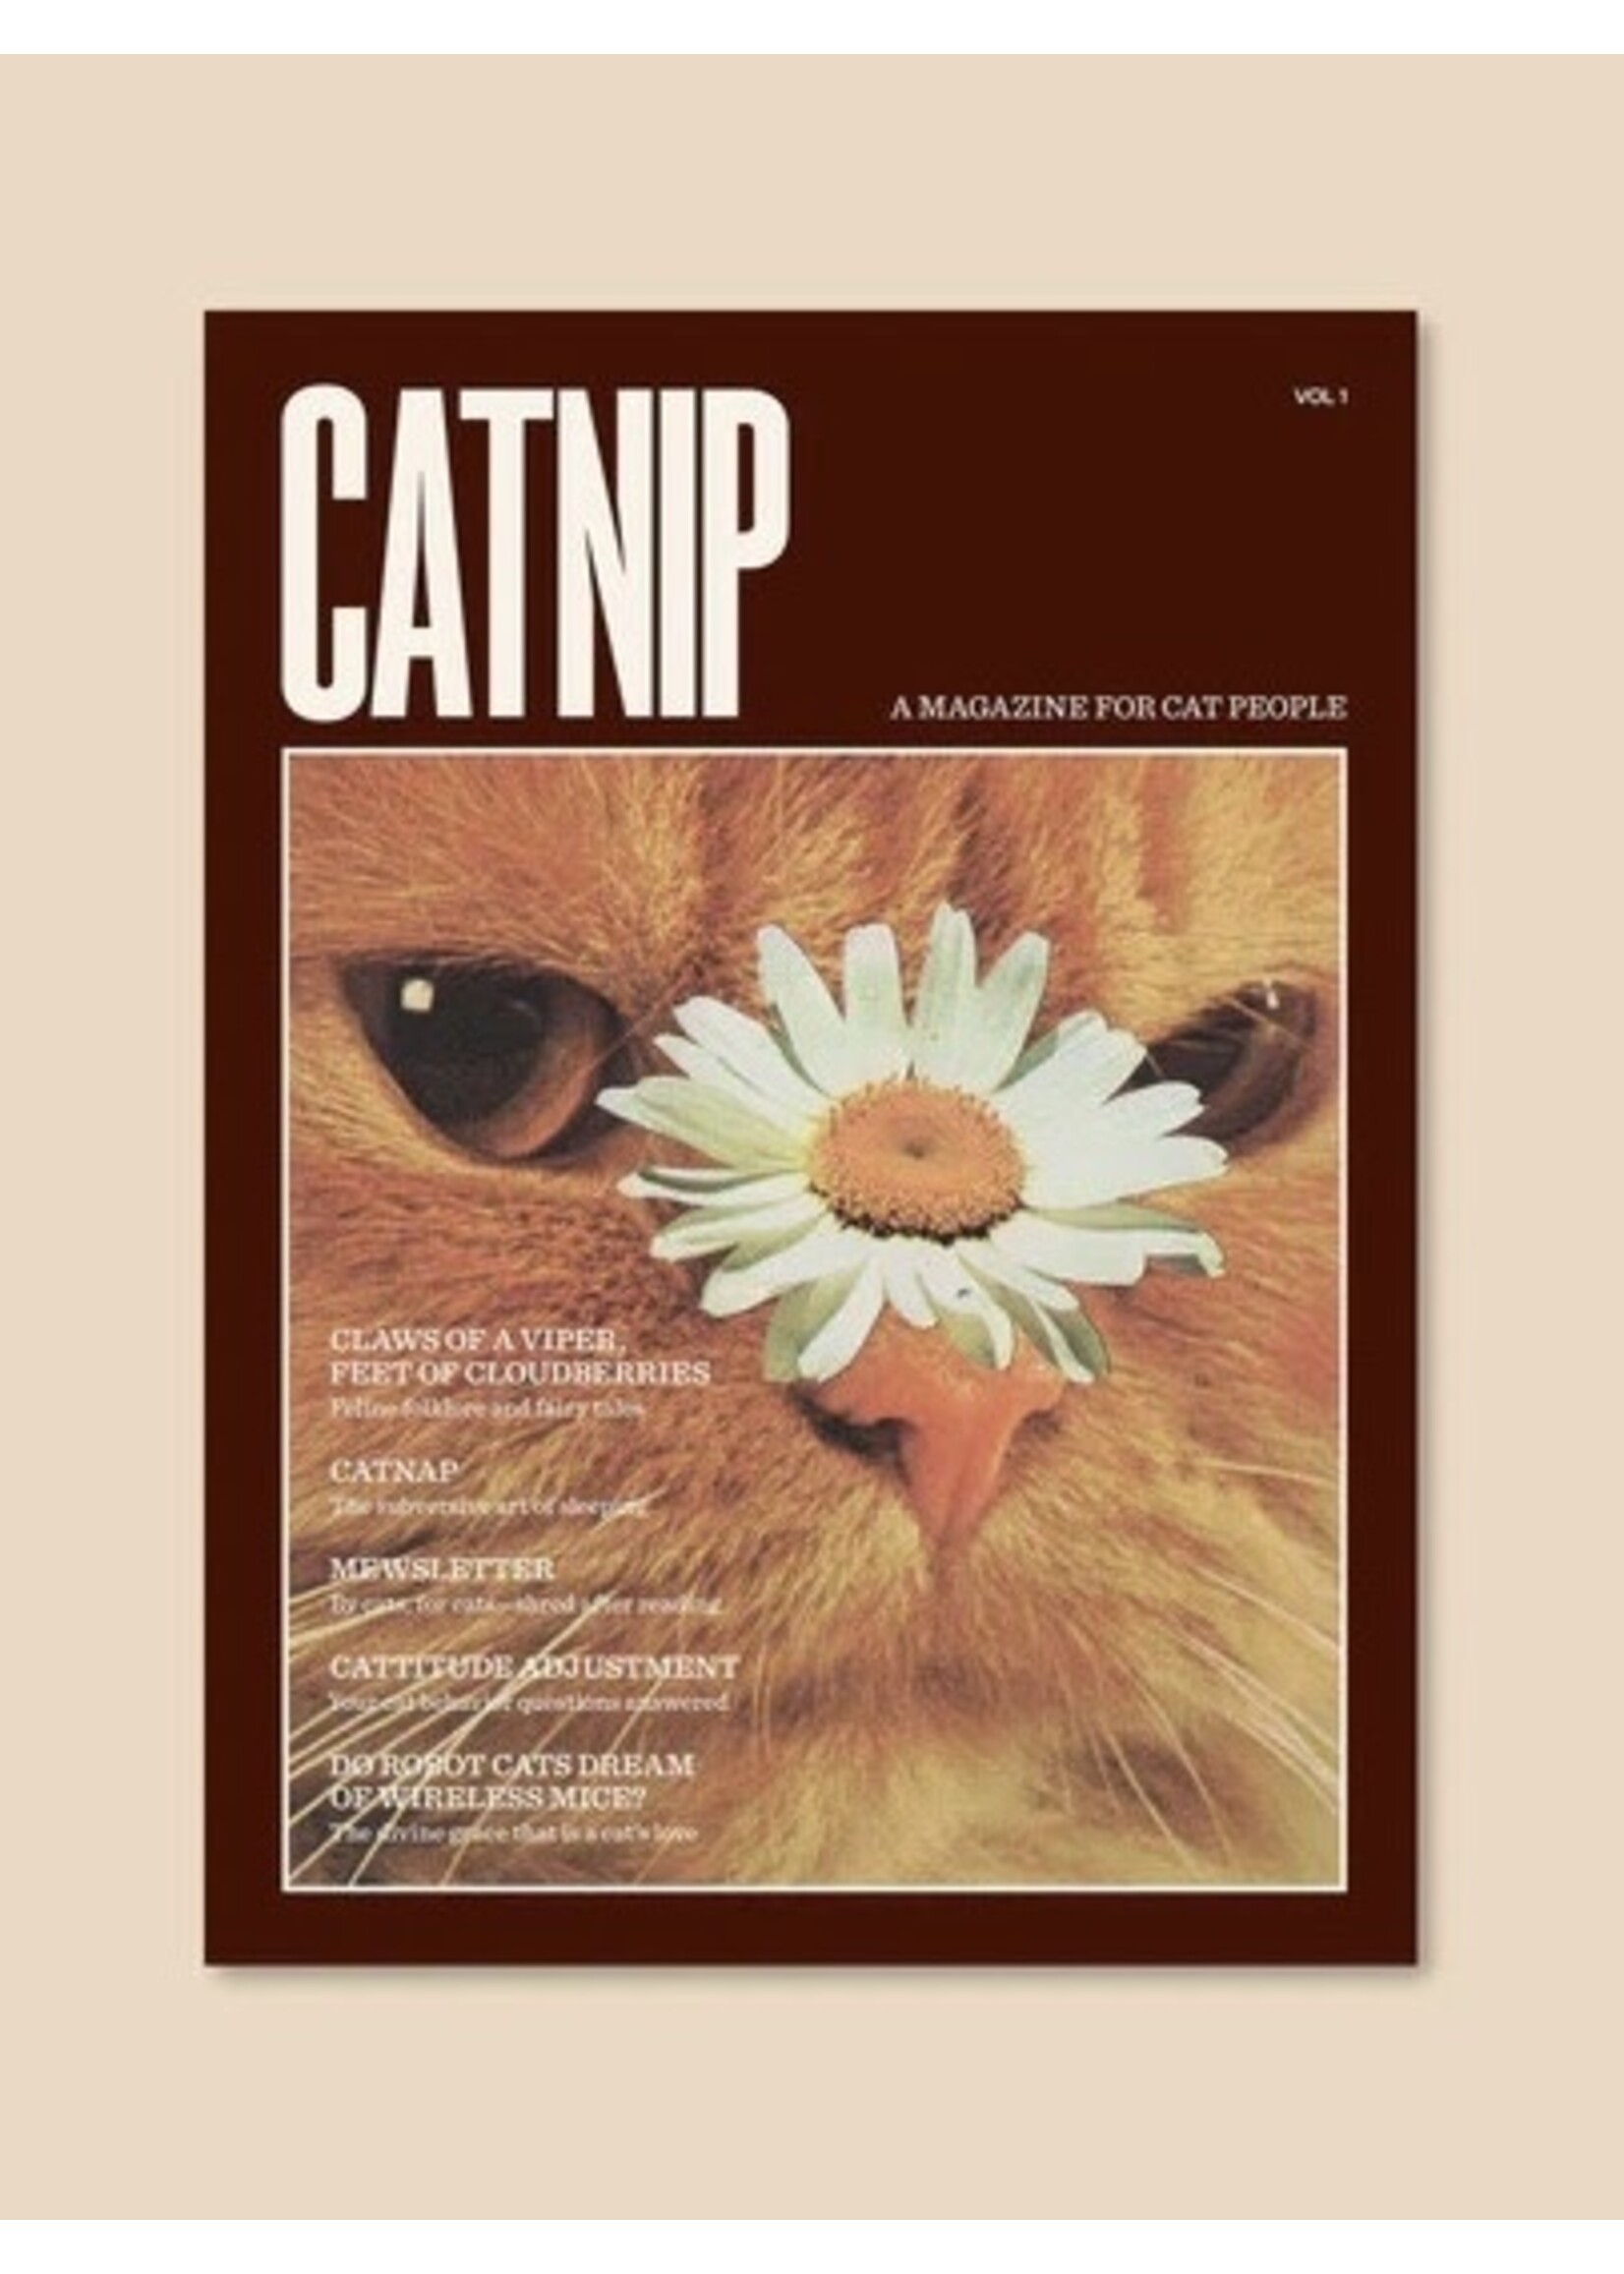 Broccoli "Catnip Magazine" by BROCCOLI